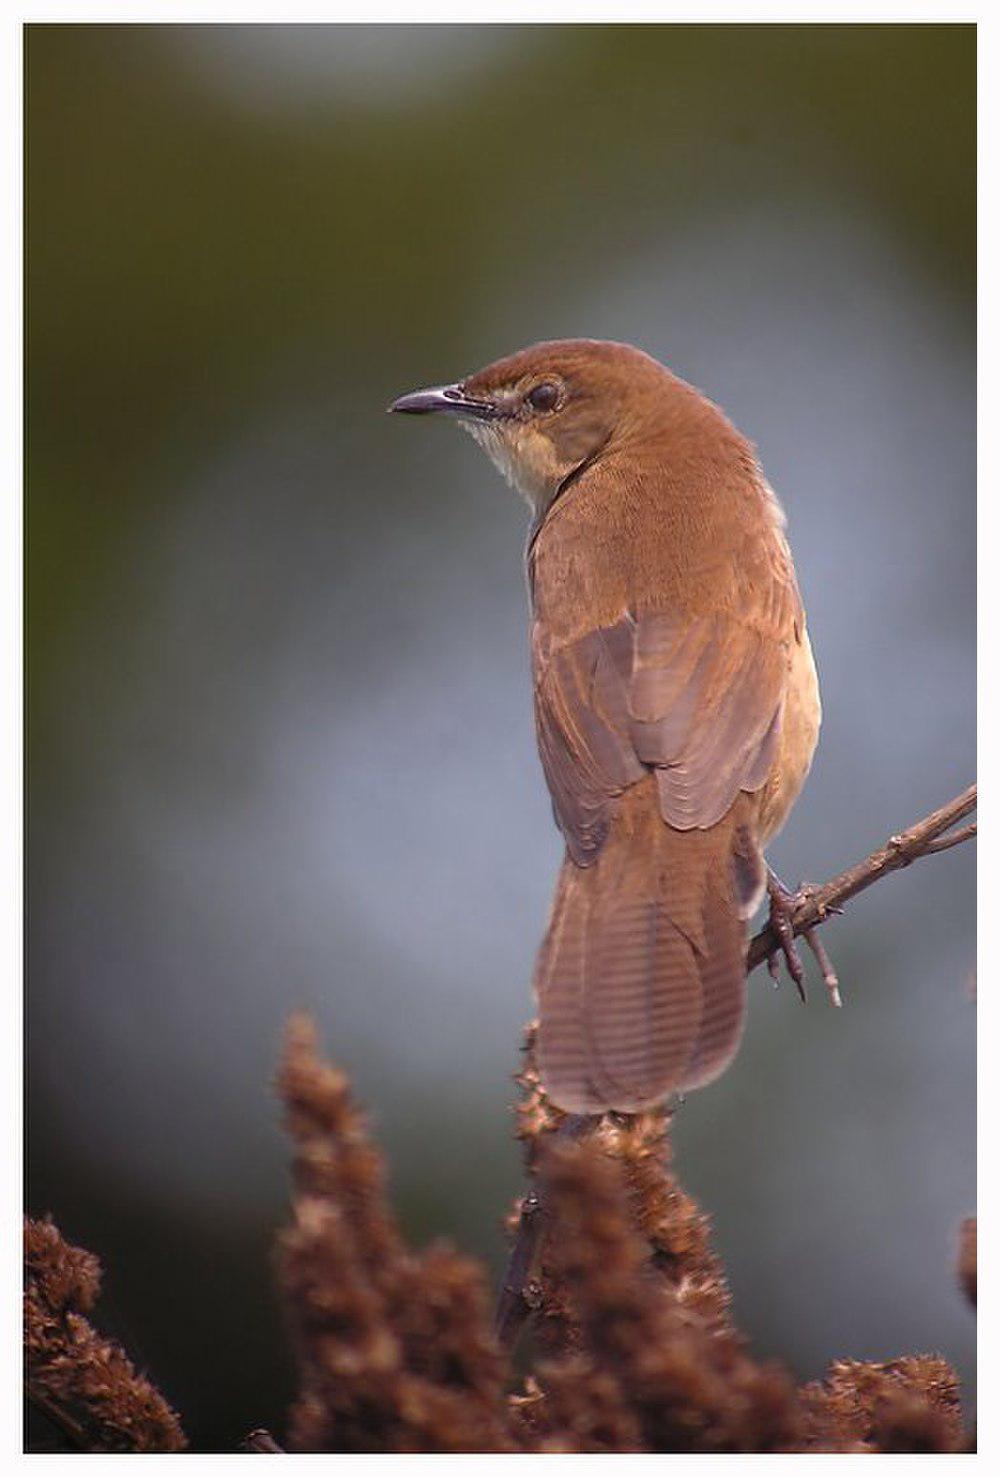 阔尾芦莺 / Broad-tailed Grassbird / Schoenicola platyurus